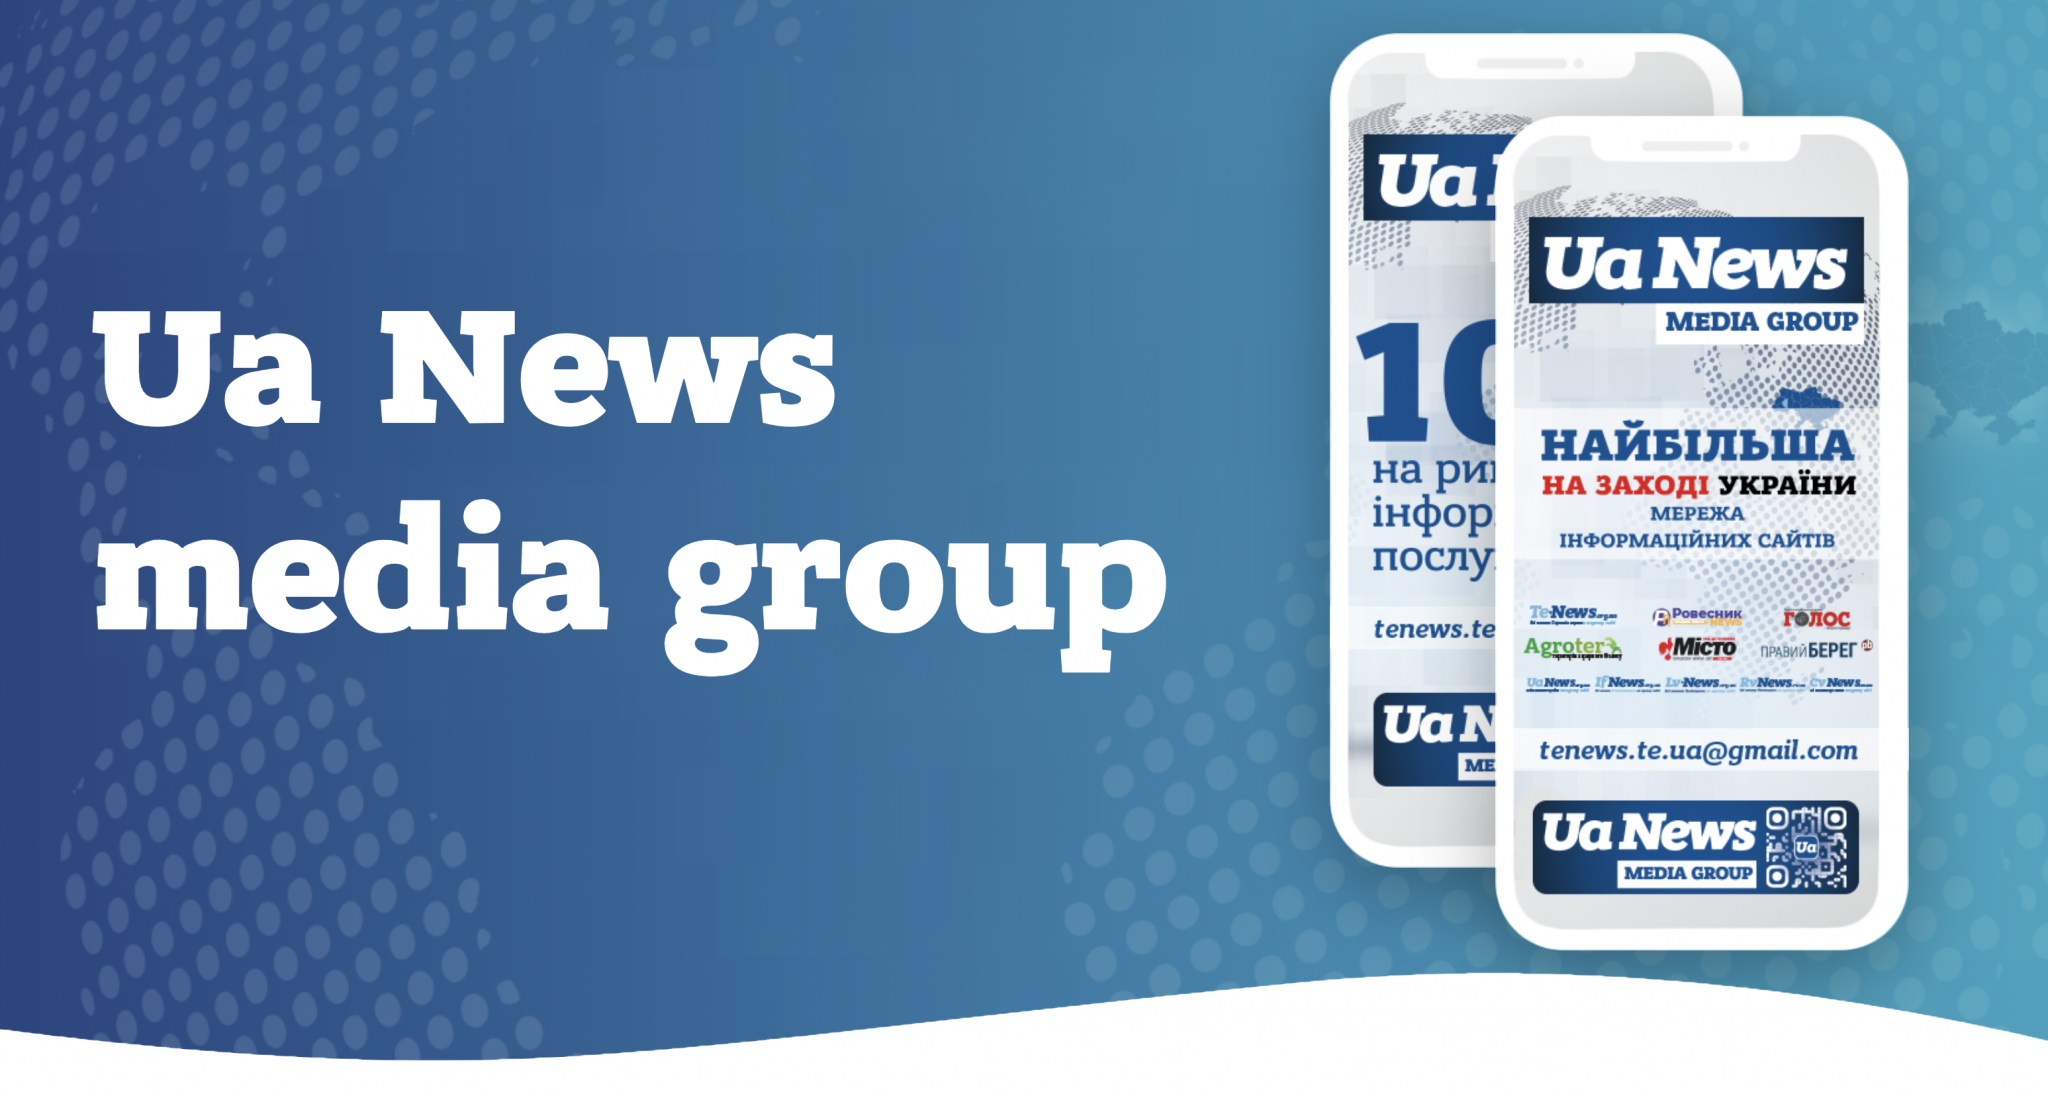 Ua News media group